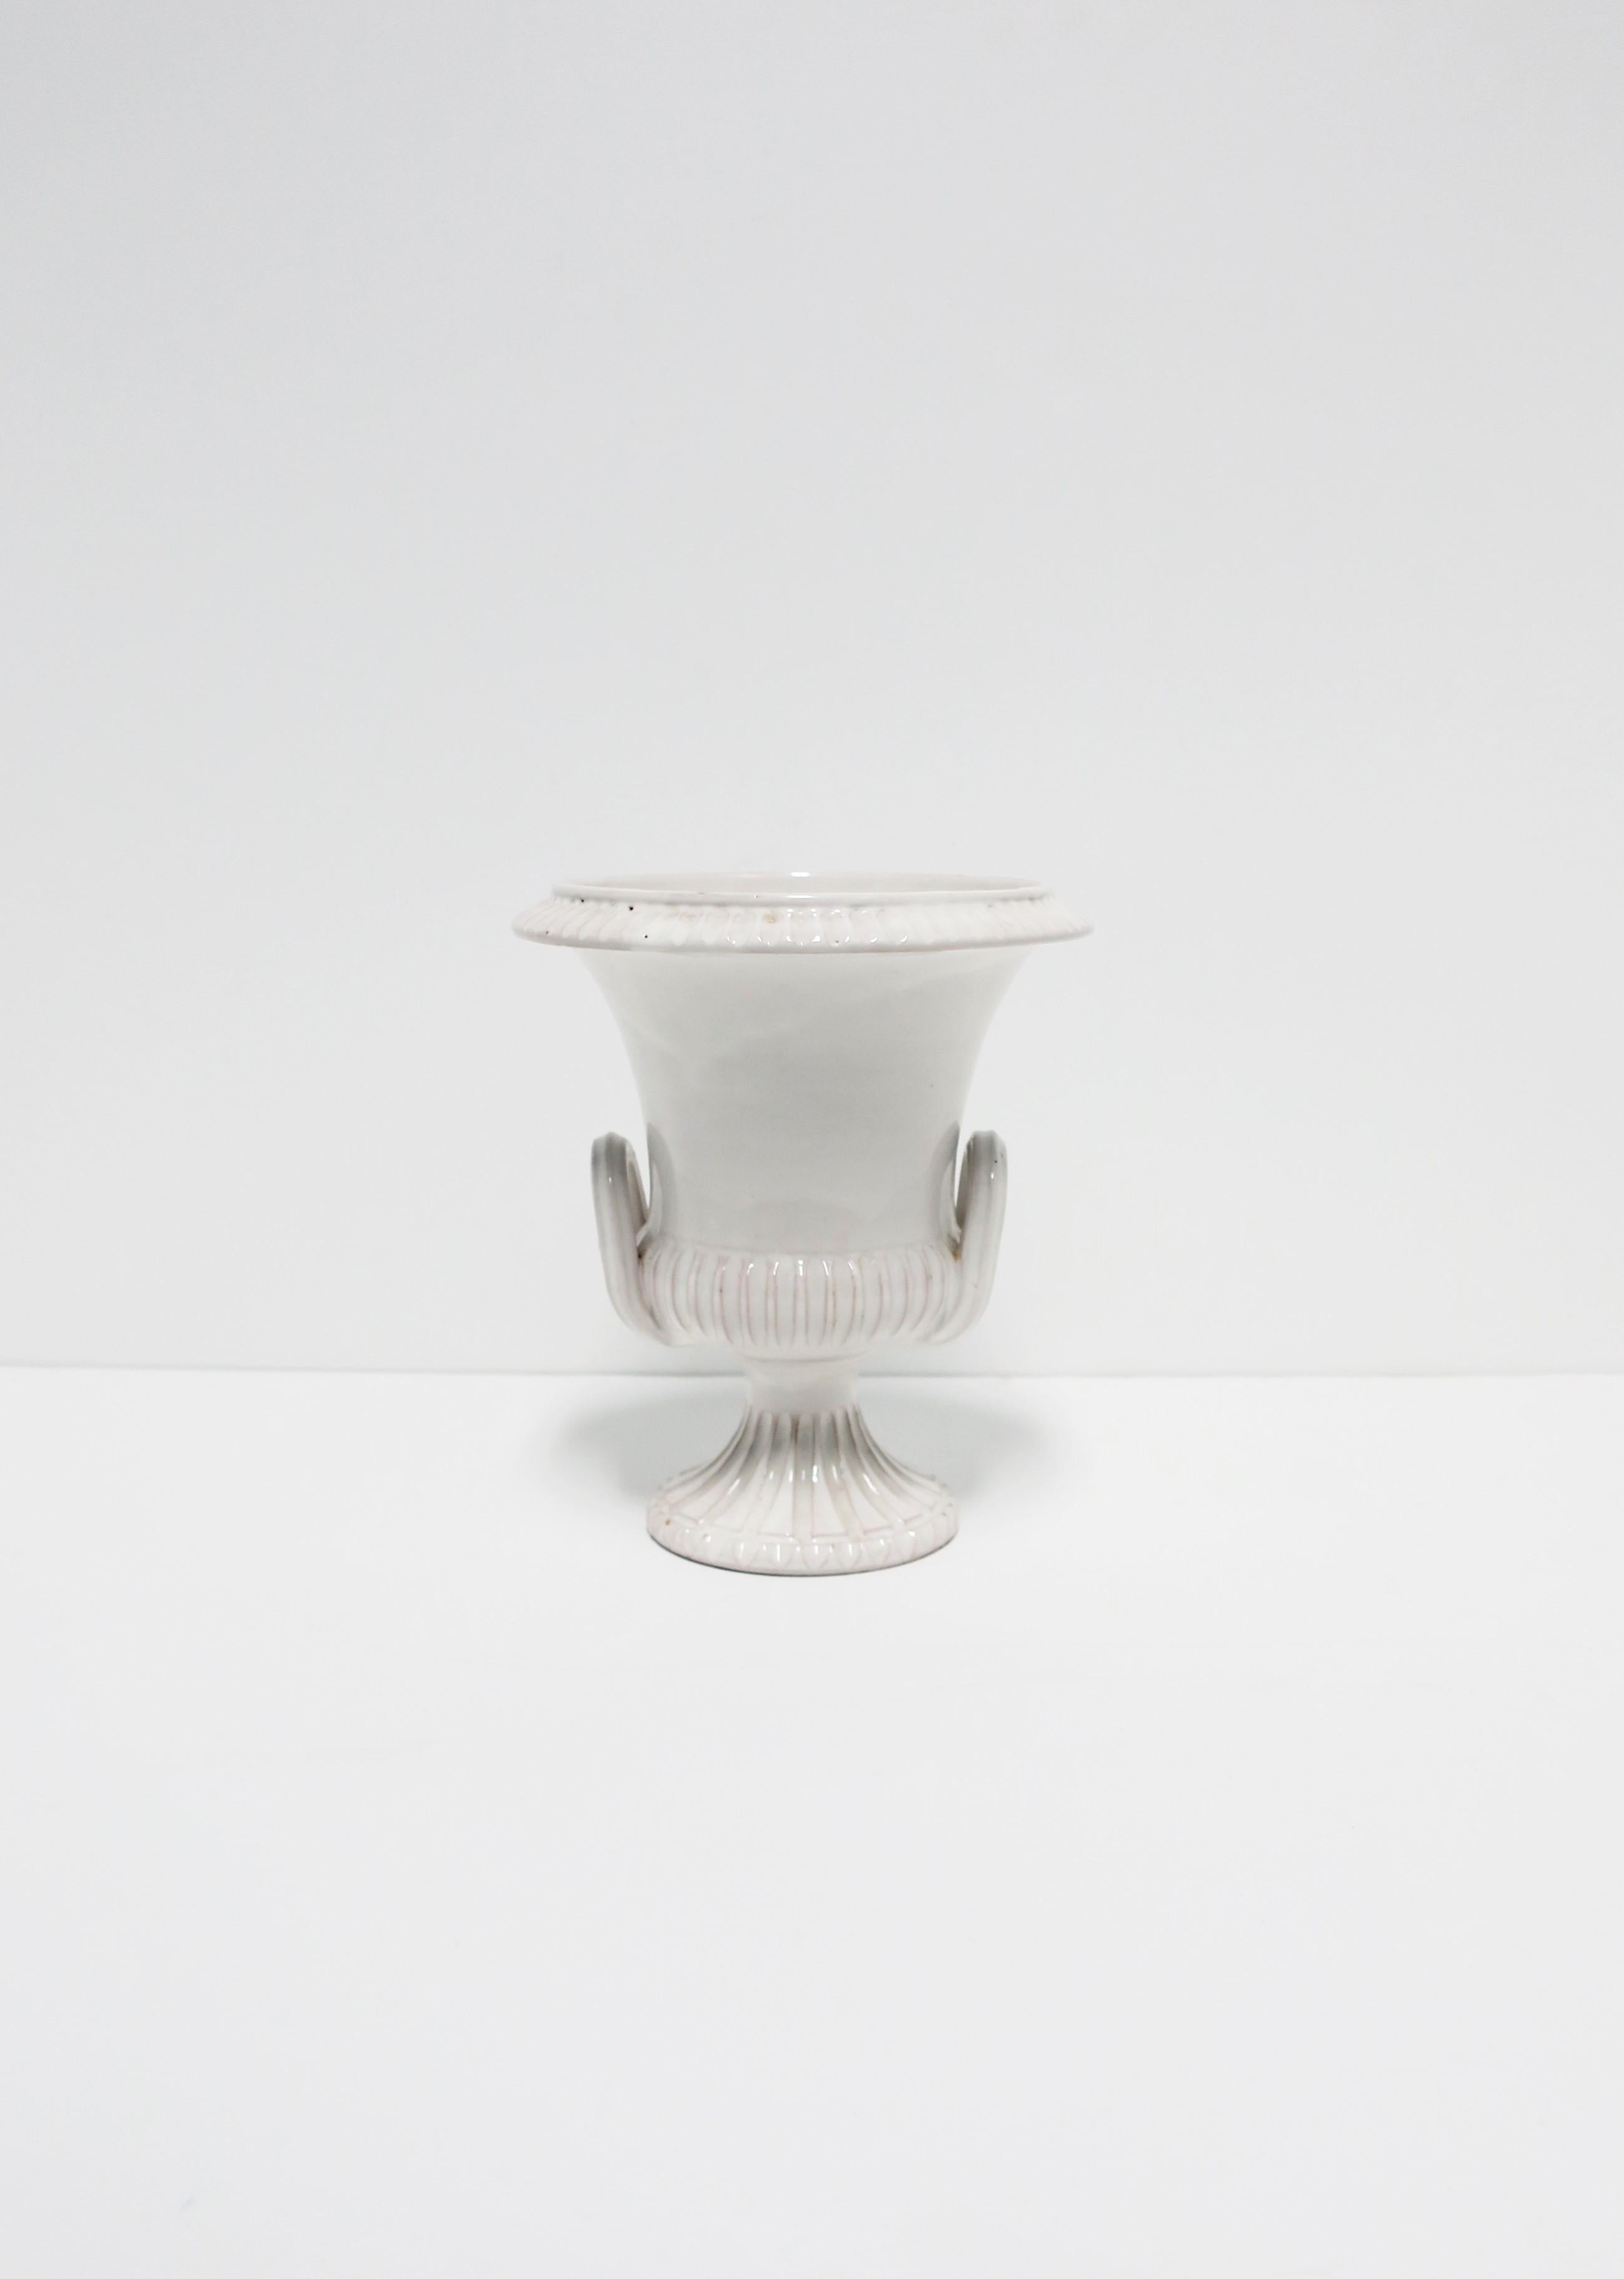 Classical Roman Italian White Pottery Urn Vessel or Vase